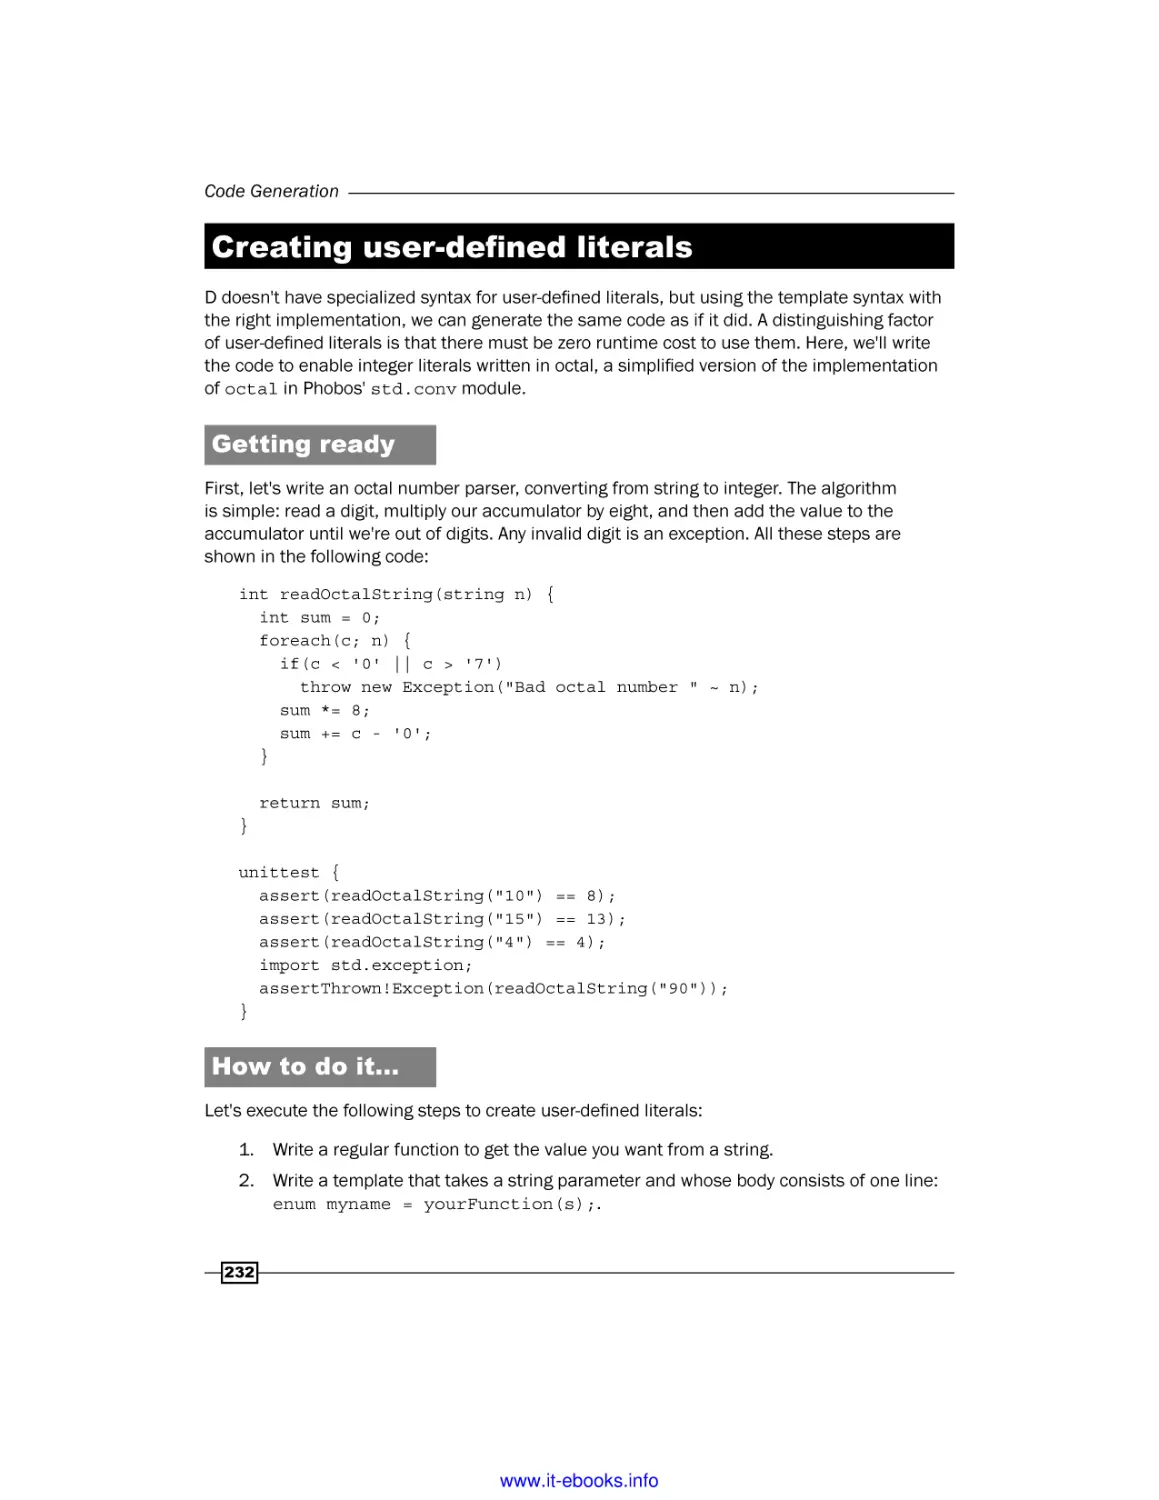 Creating user-defined literals